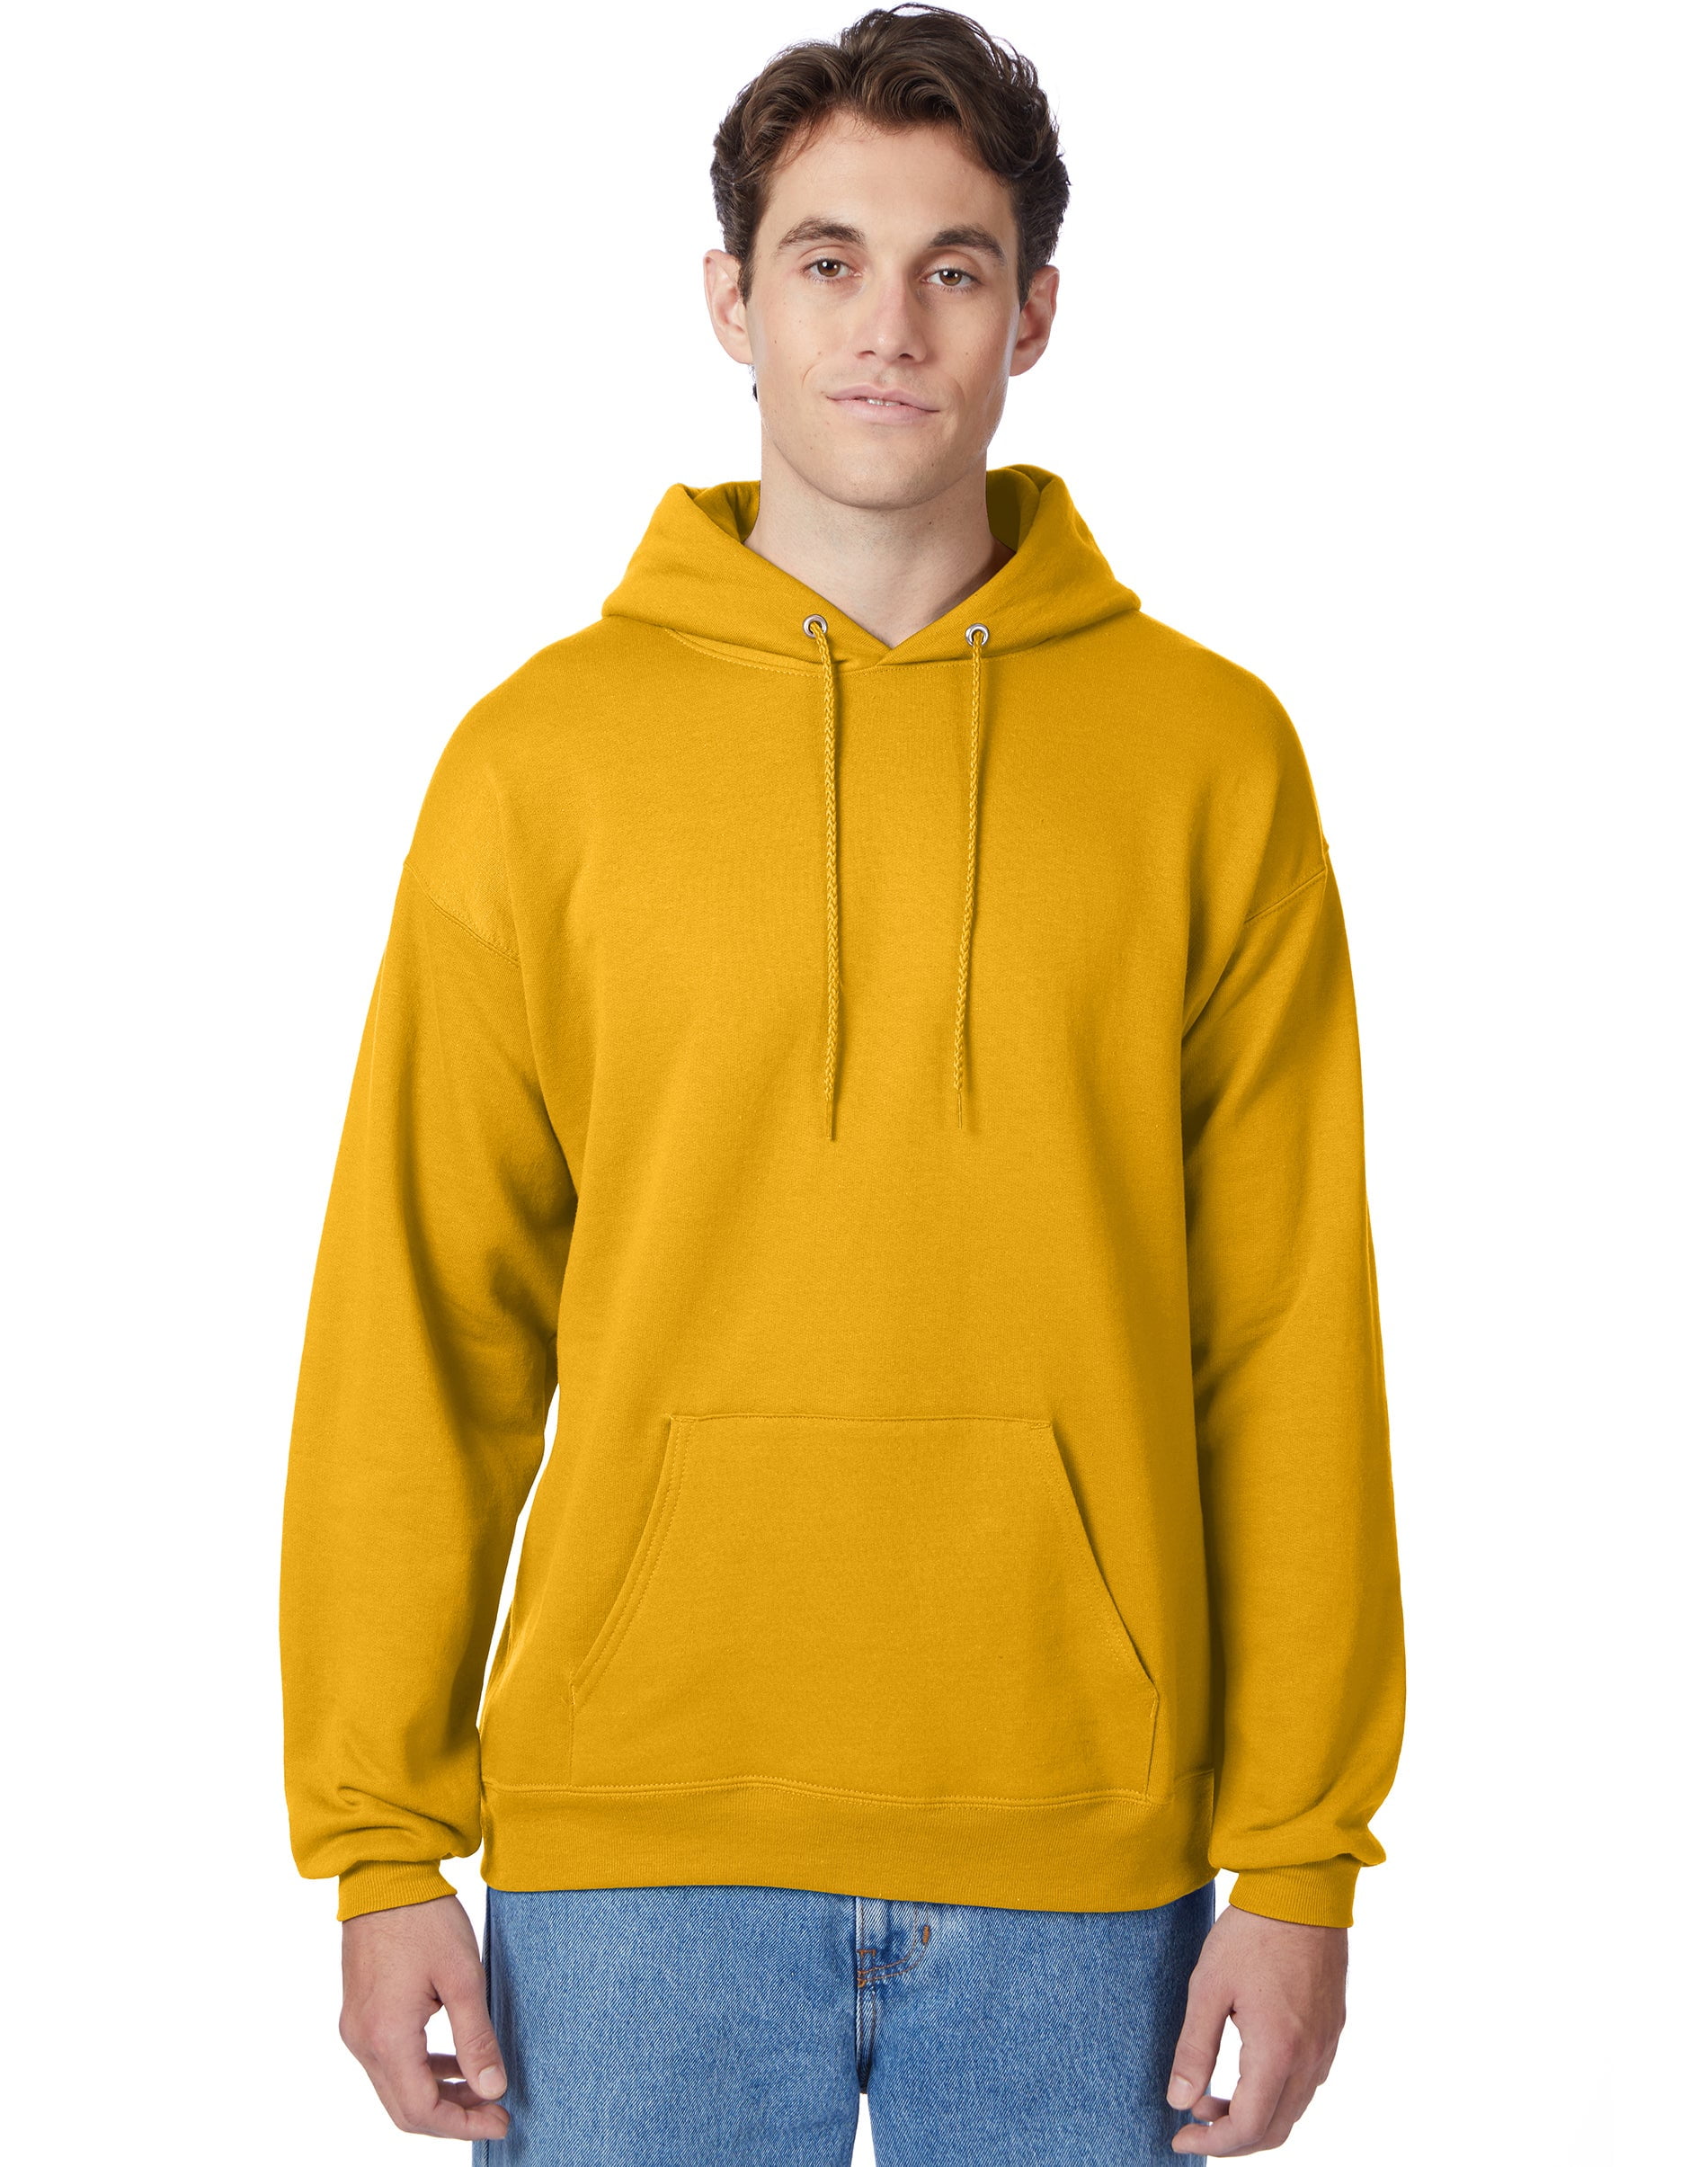 Hanes EcoSmart Unisex Fleece Hoodie (Big & Tall Sizes Available) Gold M